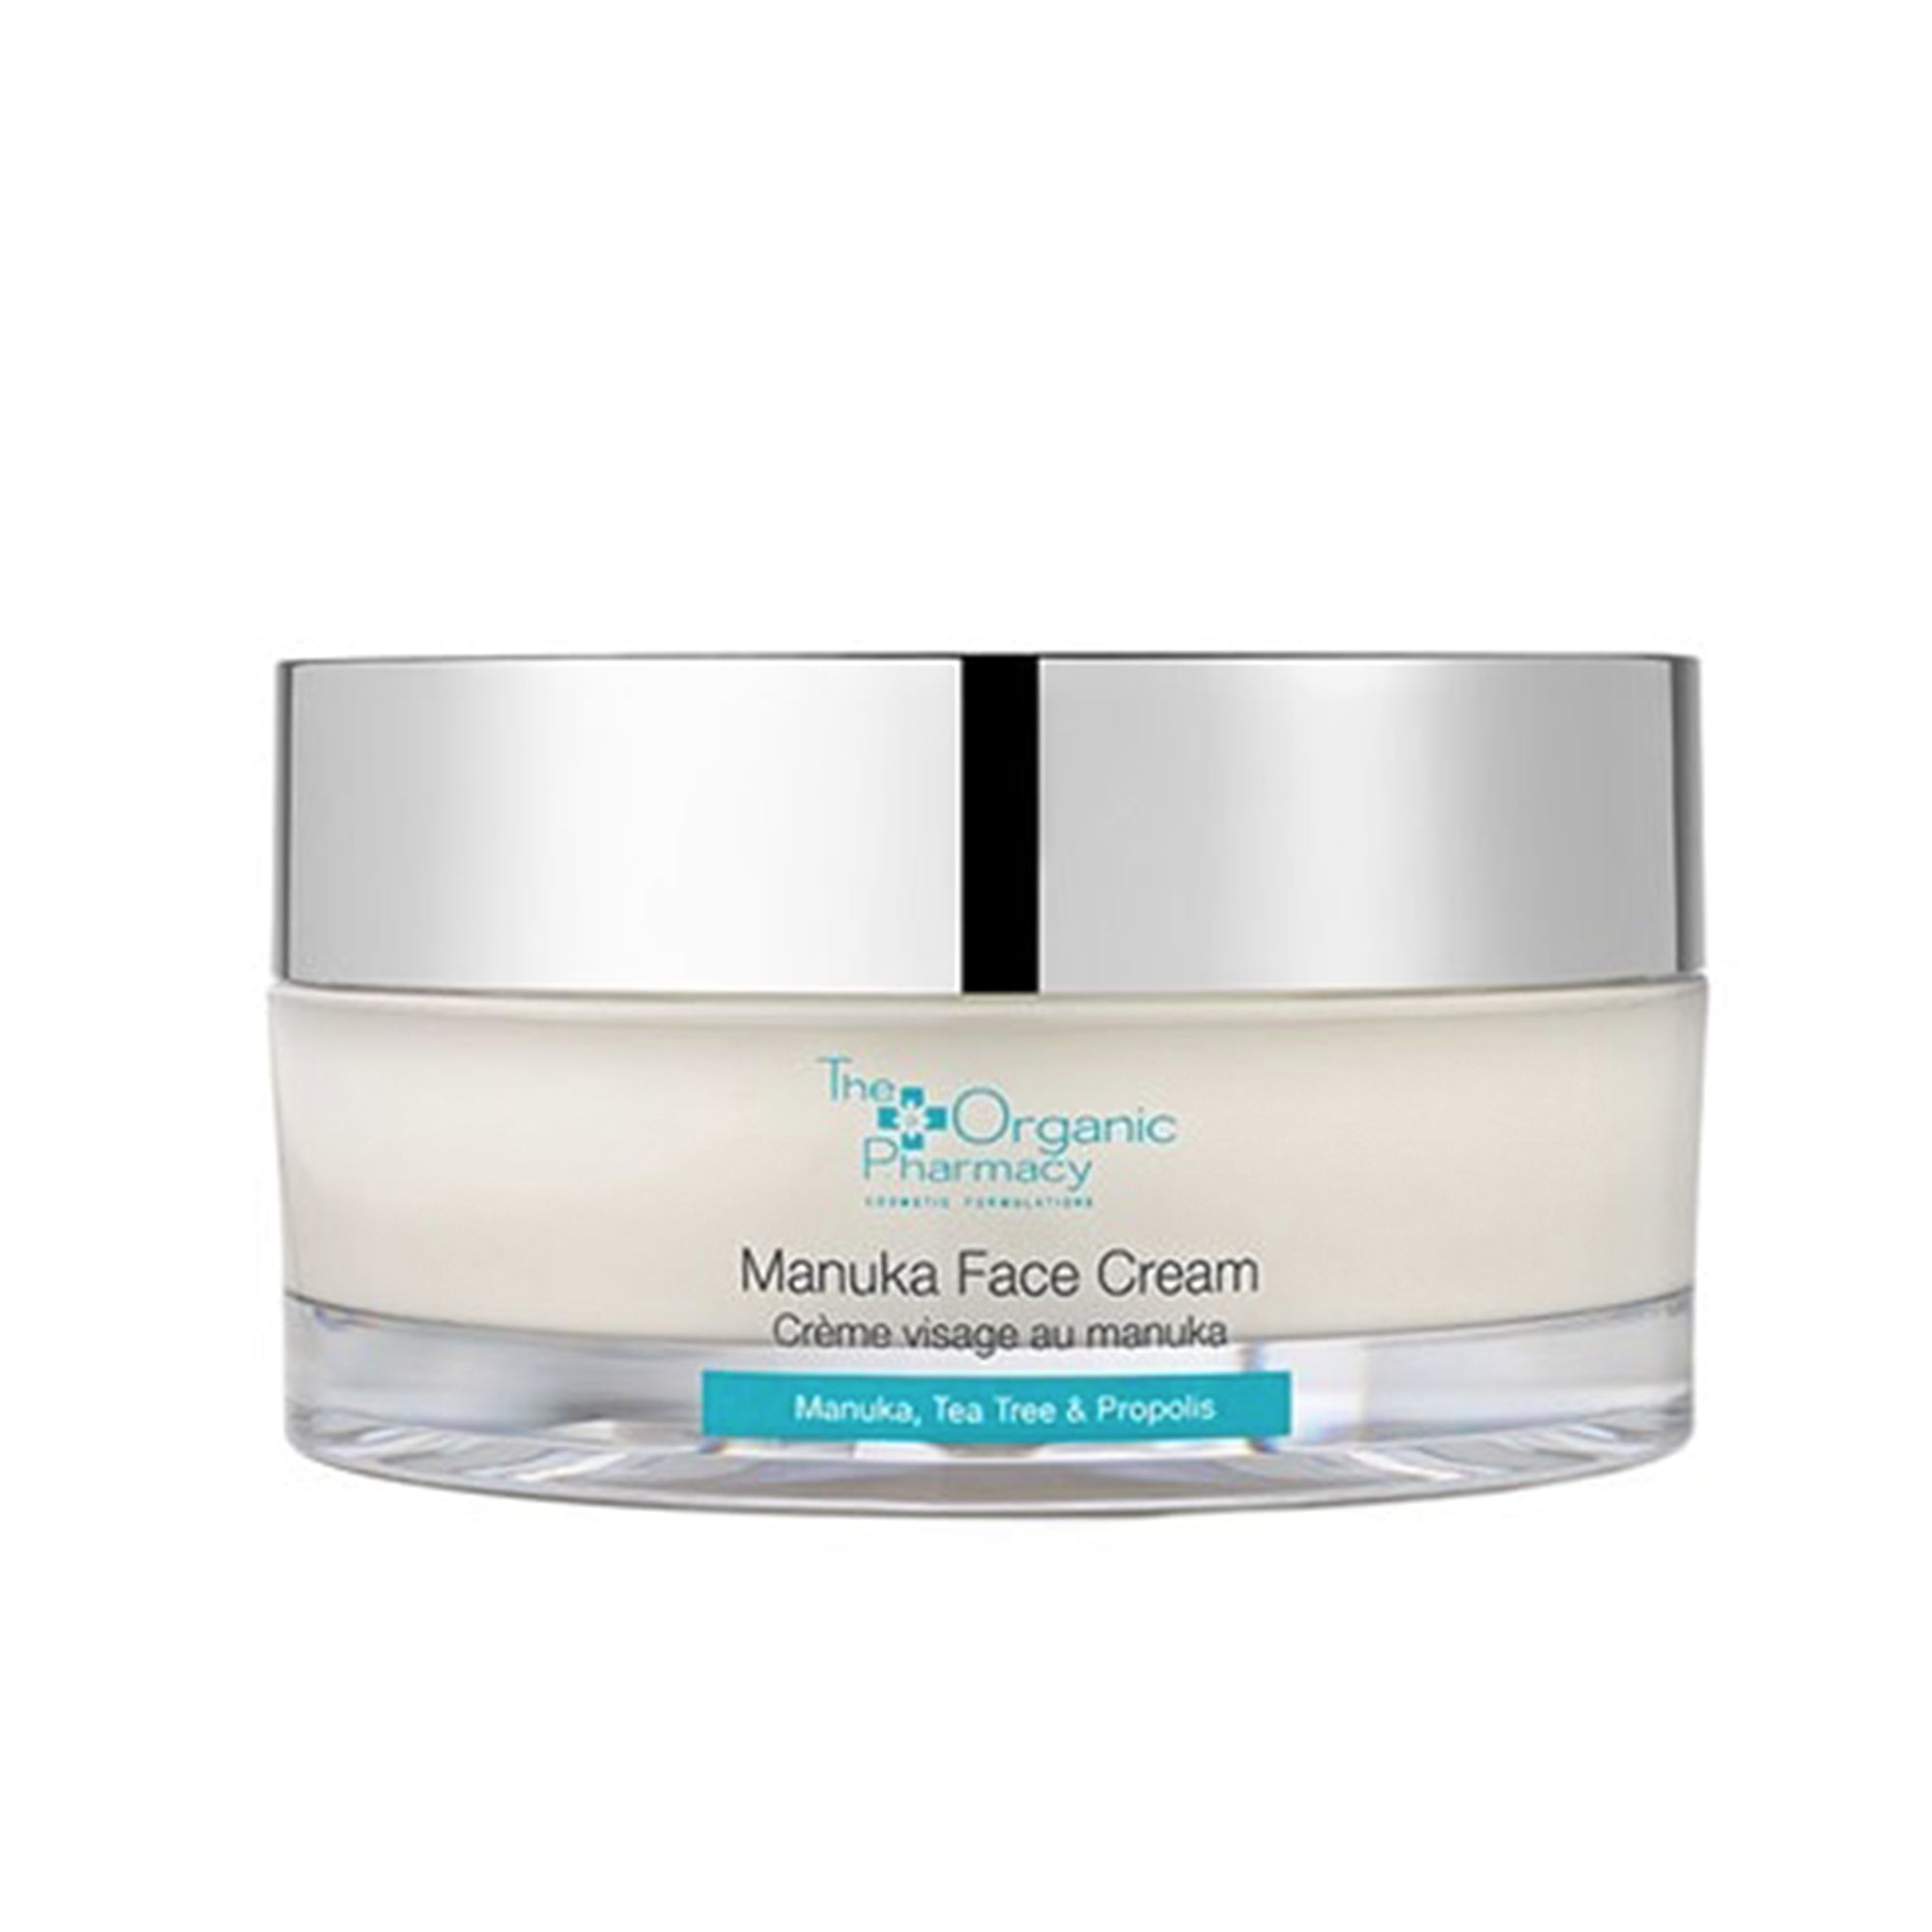 The Organic Pharmacy Manuka Face Cream | Manuka Face Cream 50ml